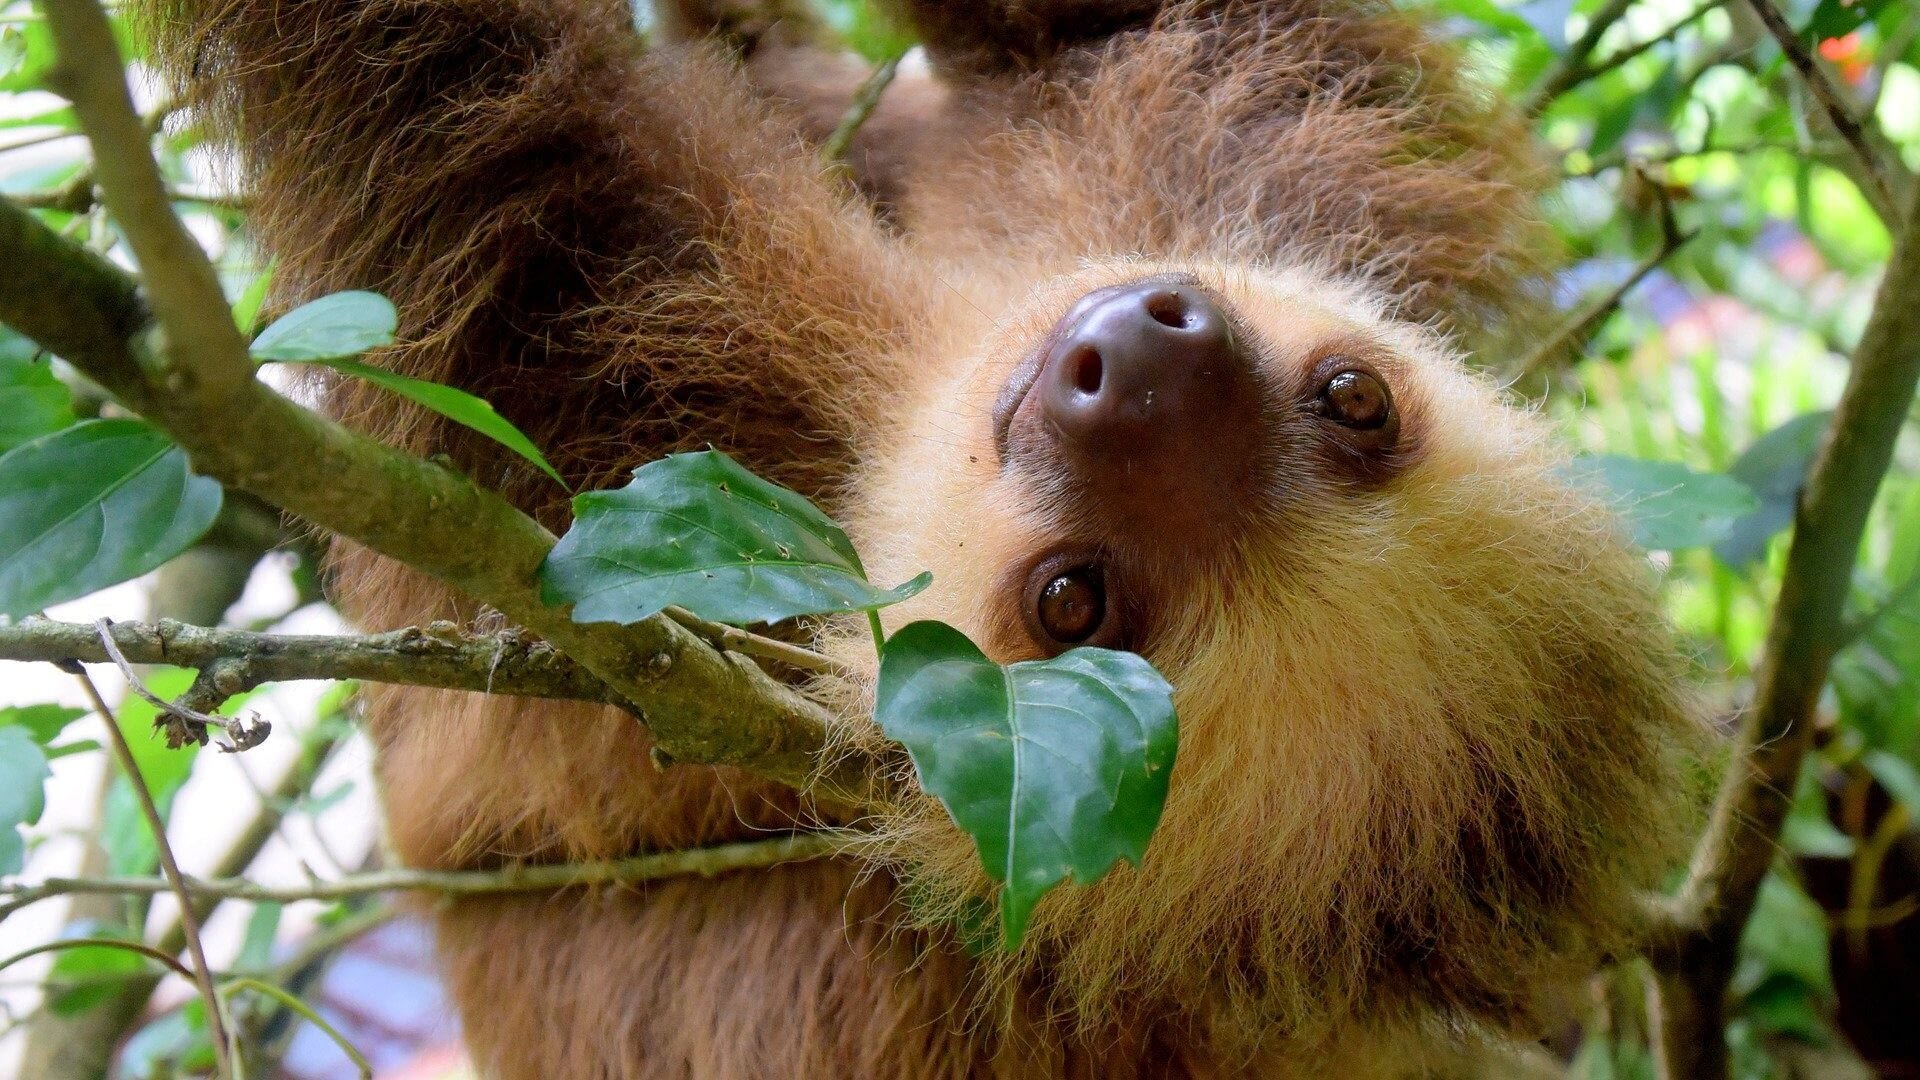 Image: Sloth smiling